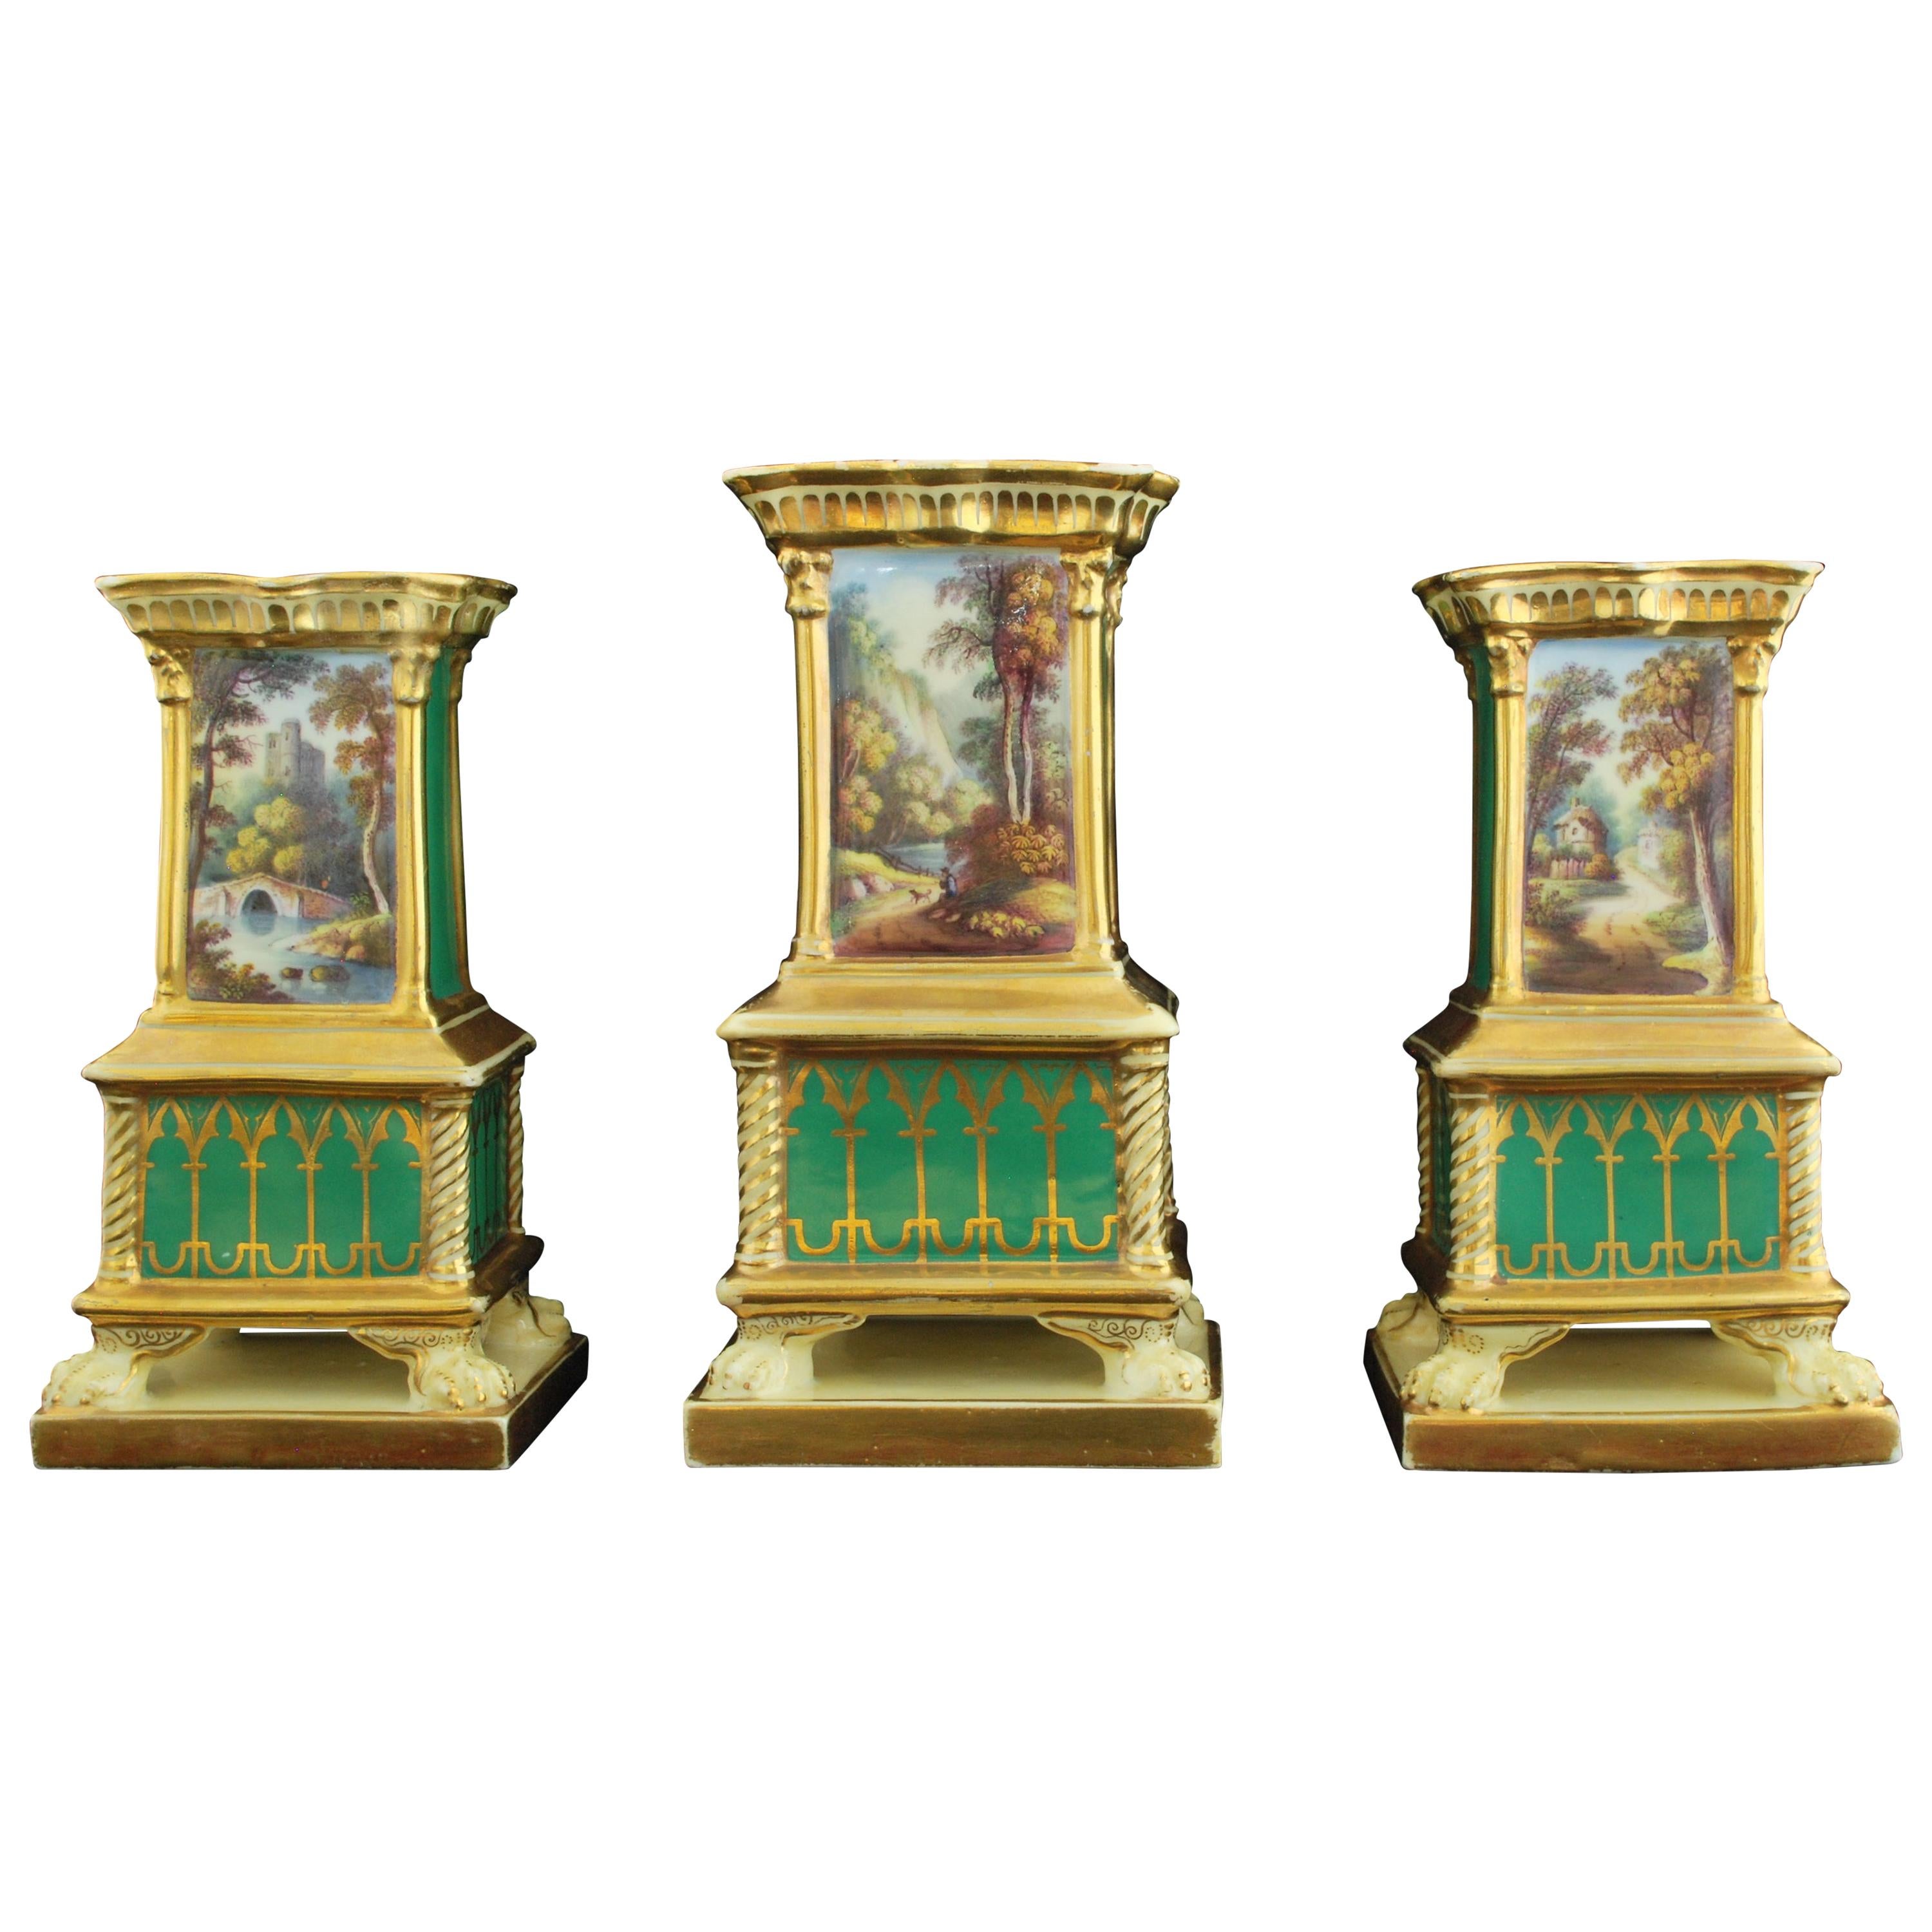 Garniture of Three Spill Vases, Painted by Lark Pratt, Minton, circa 1860 For Sale